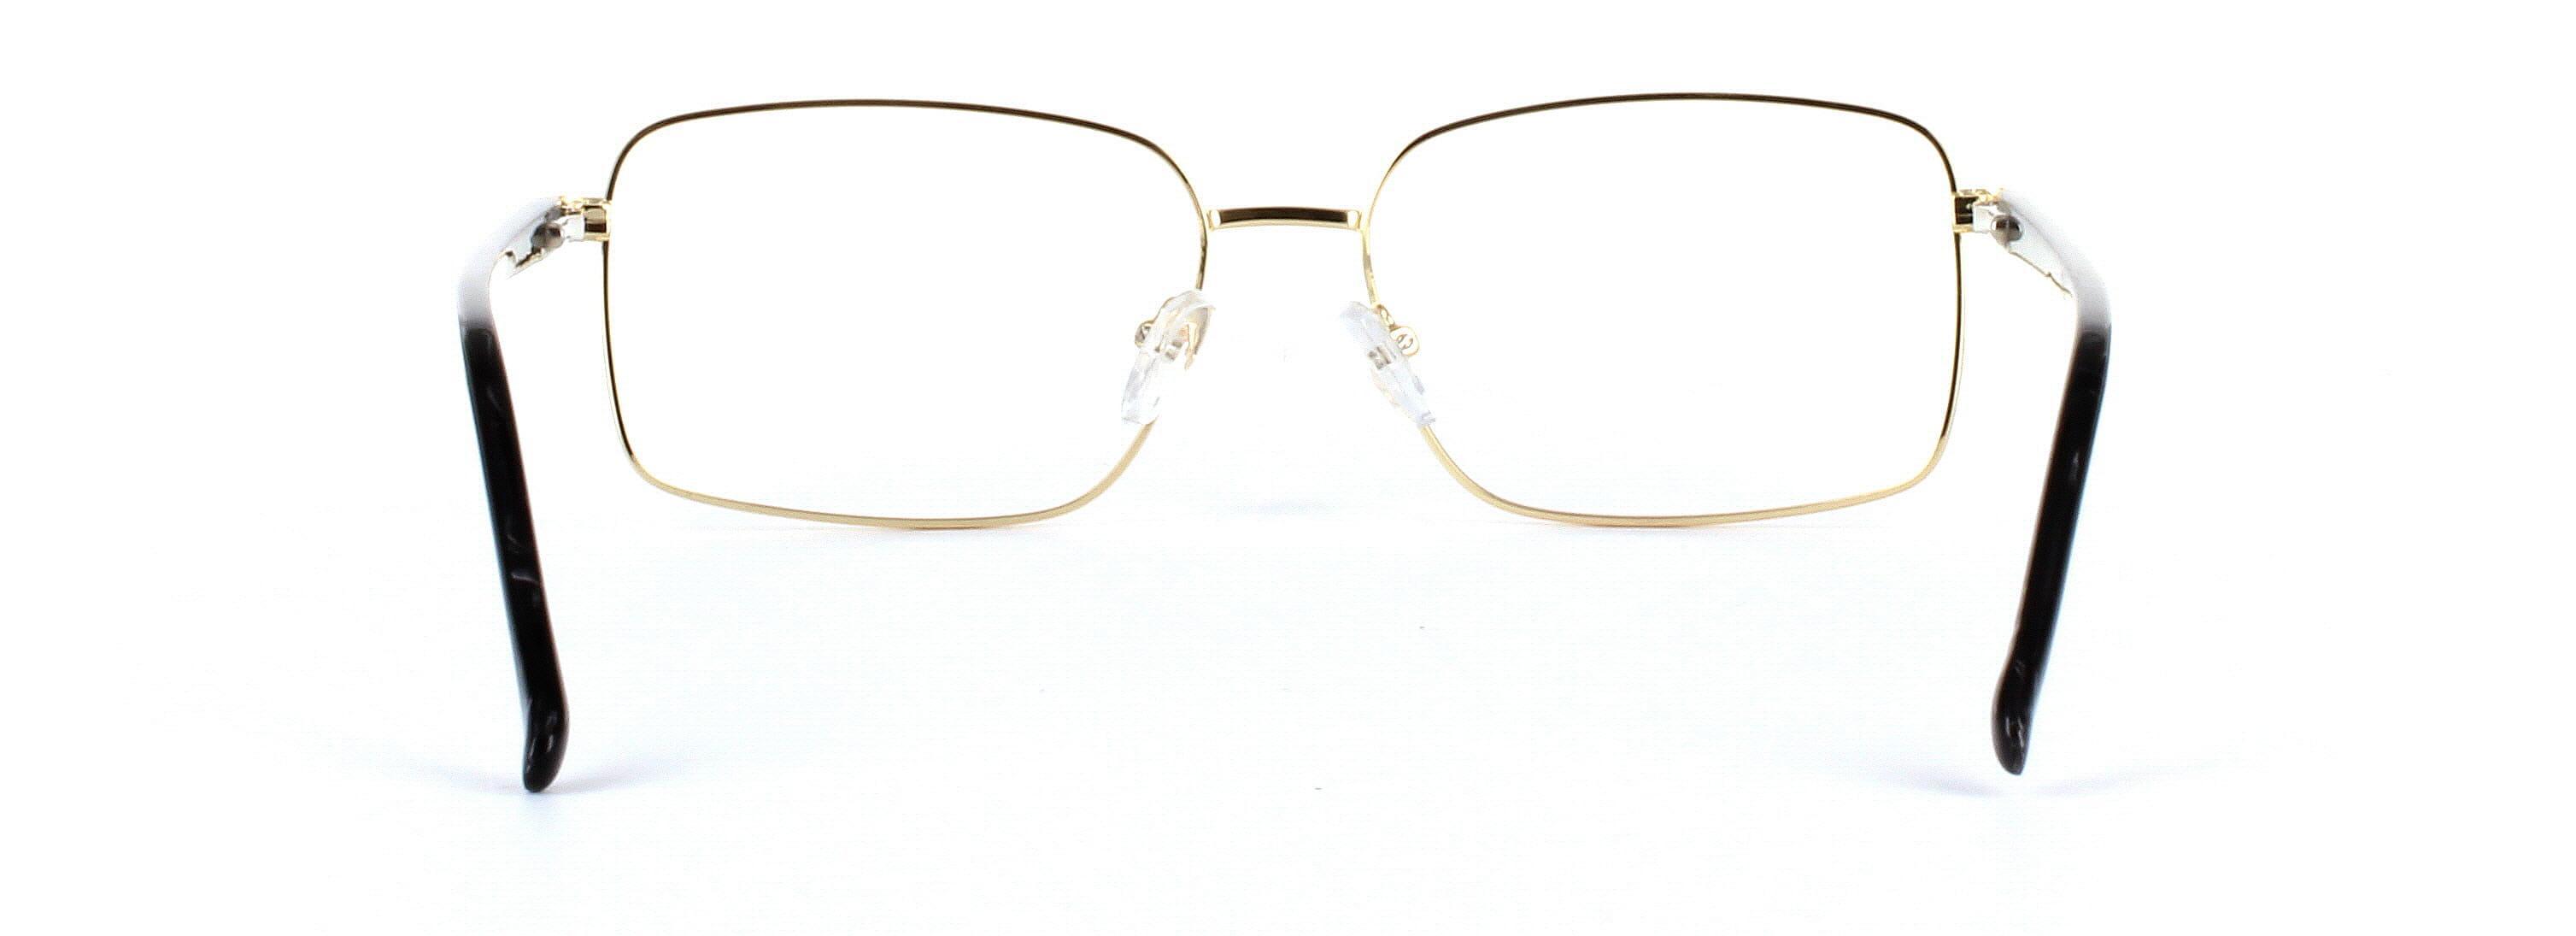 Marlborough Gold Full Rim Rectangular Glasses - Image View 3